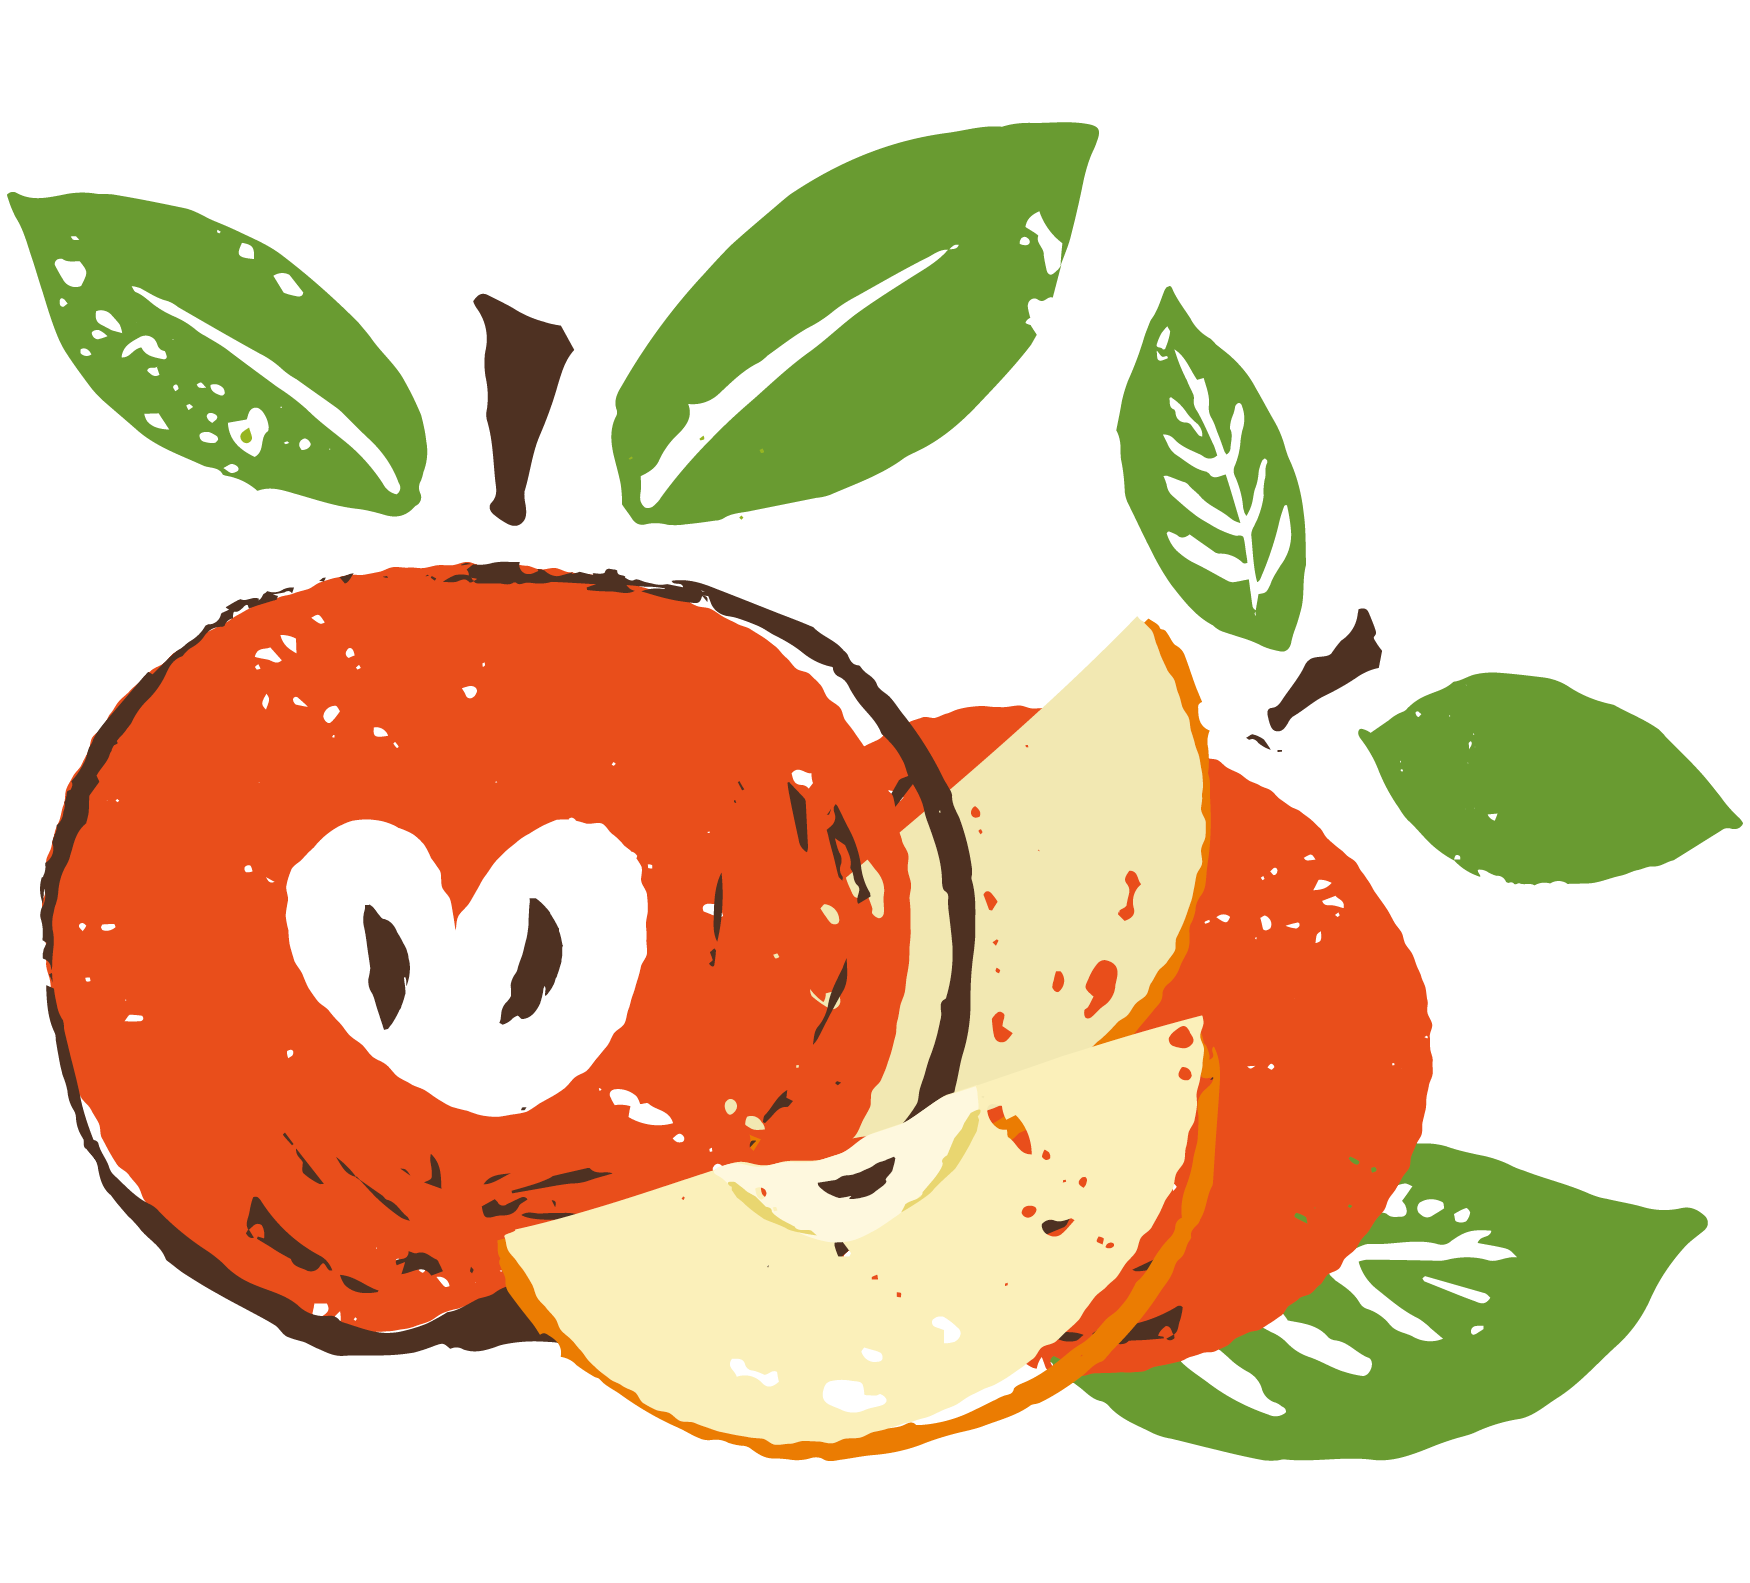 Grafik von dem Apfel des Logos vom Obsthof Poppinga